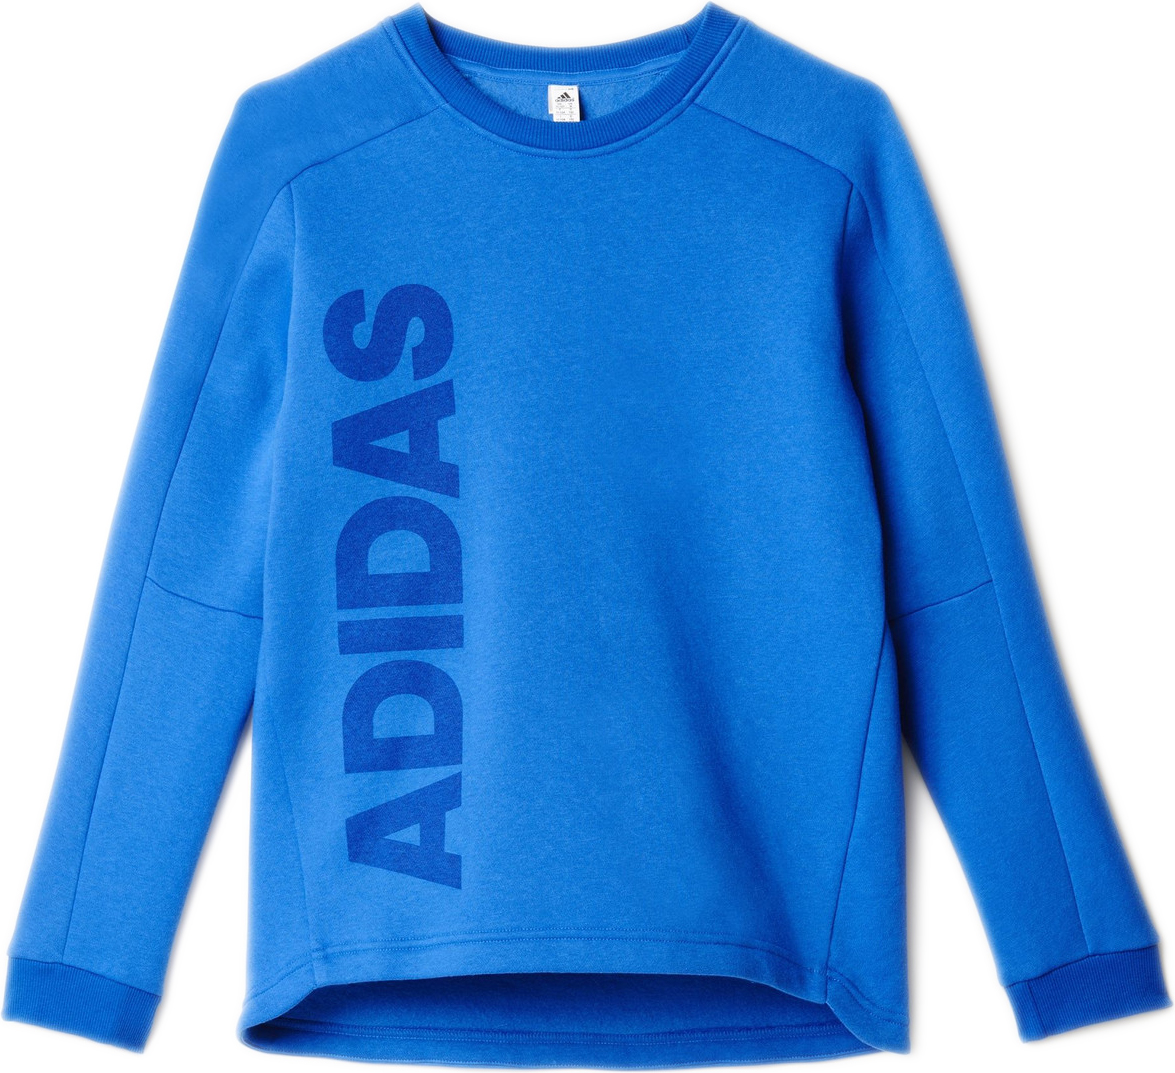 Свитшот для мальчика Adidas Yb Aa Crew, цвет: синий. AX6426. Размер 116